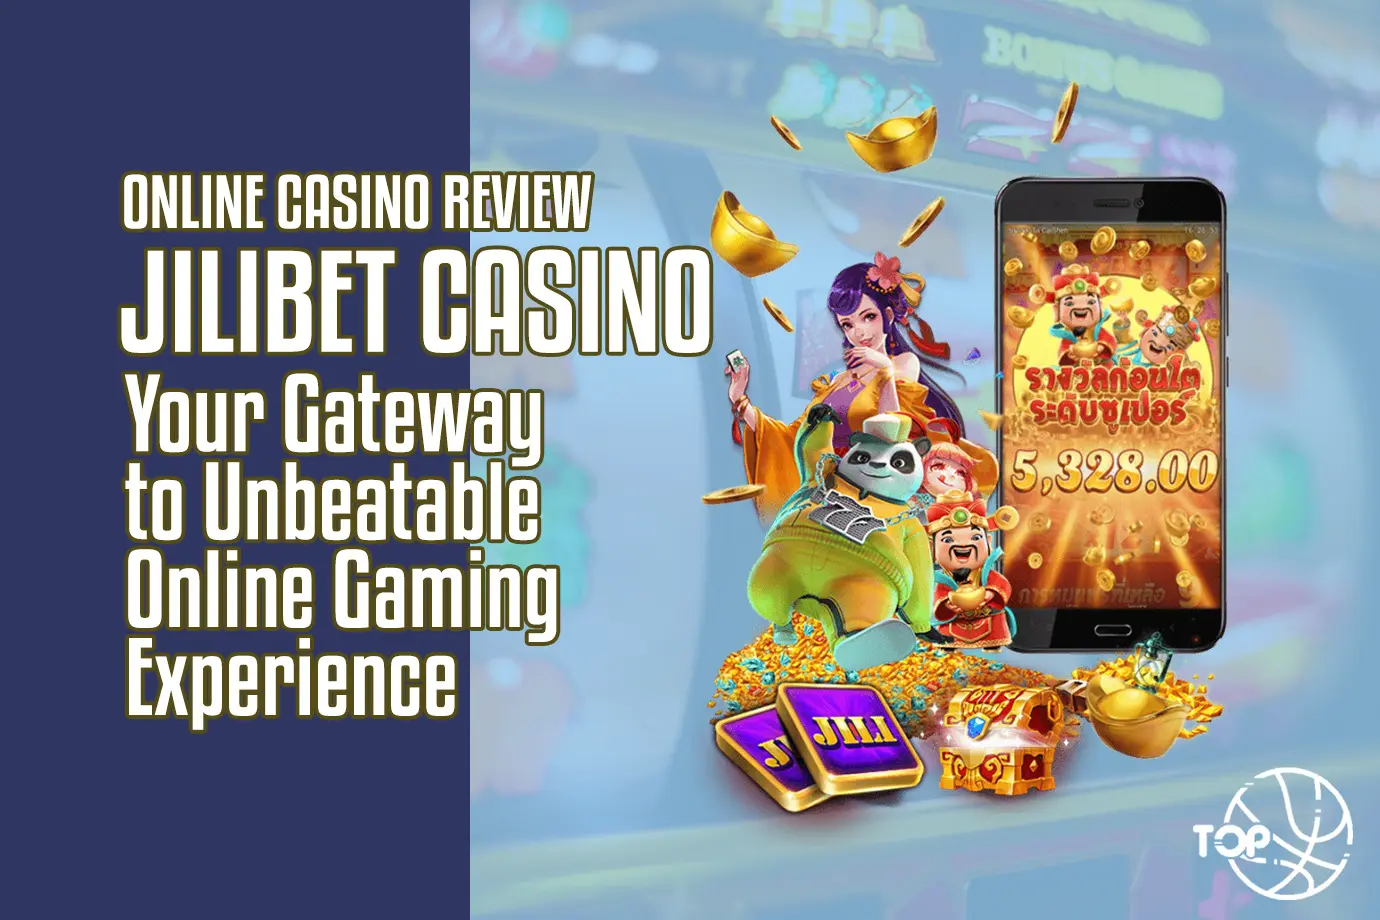 JILIBET Casino: Your Gateway to Unbeatable Online Gaming